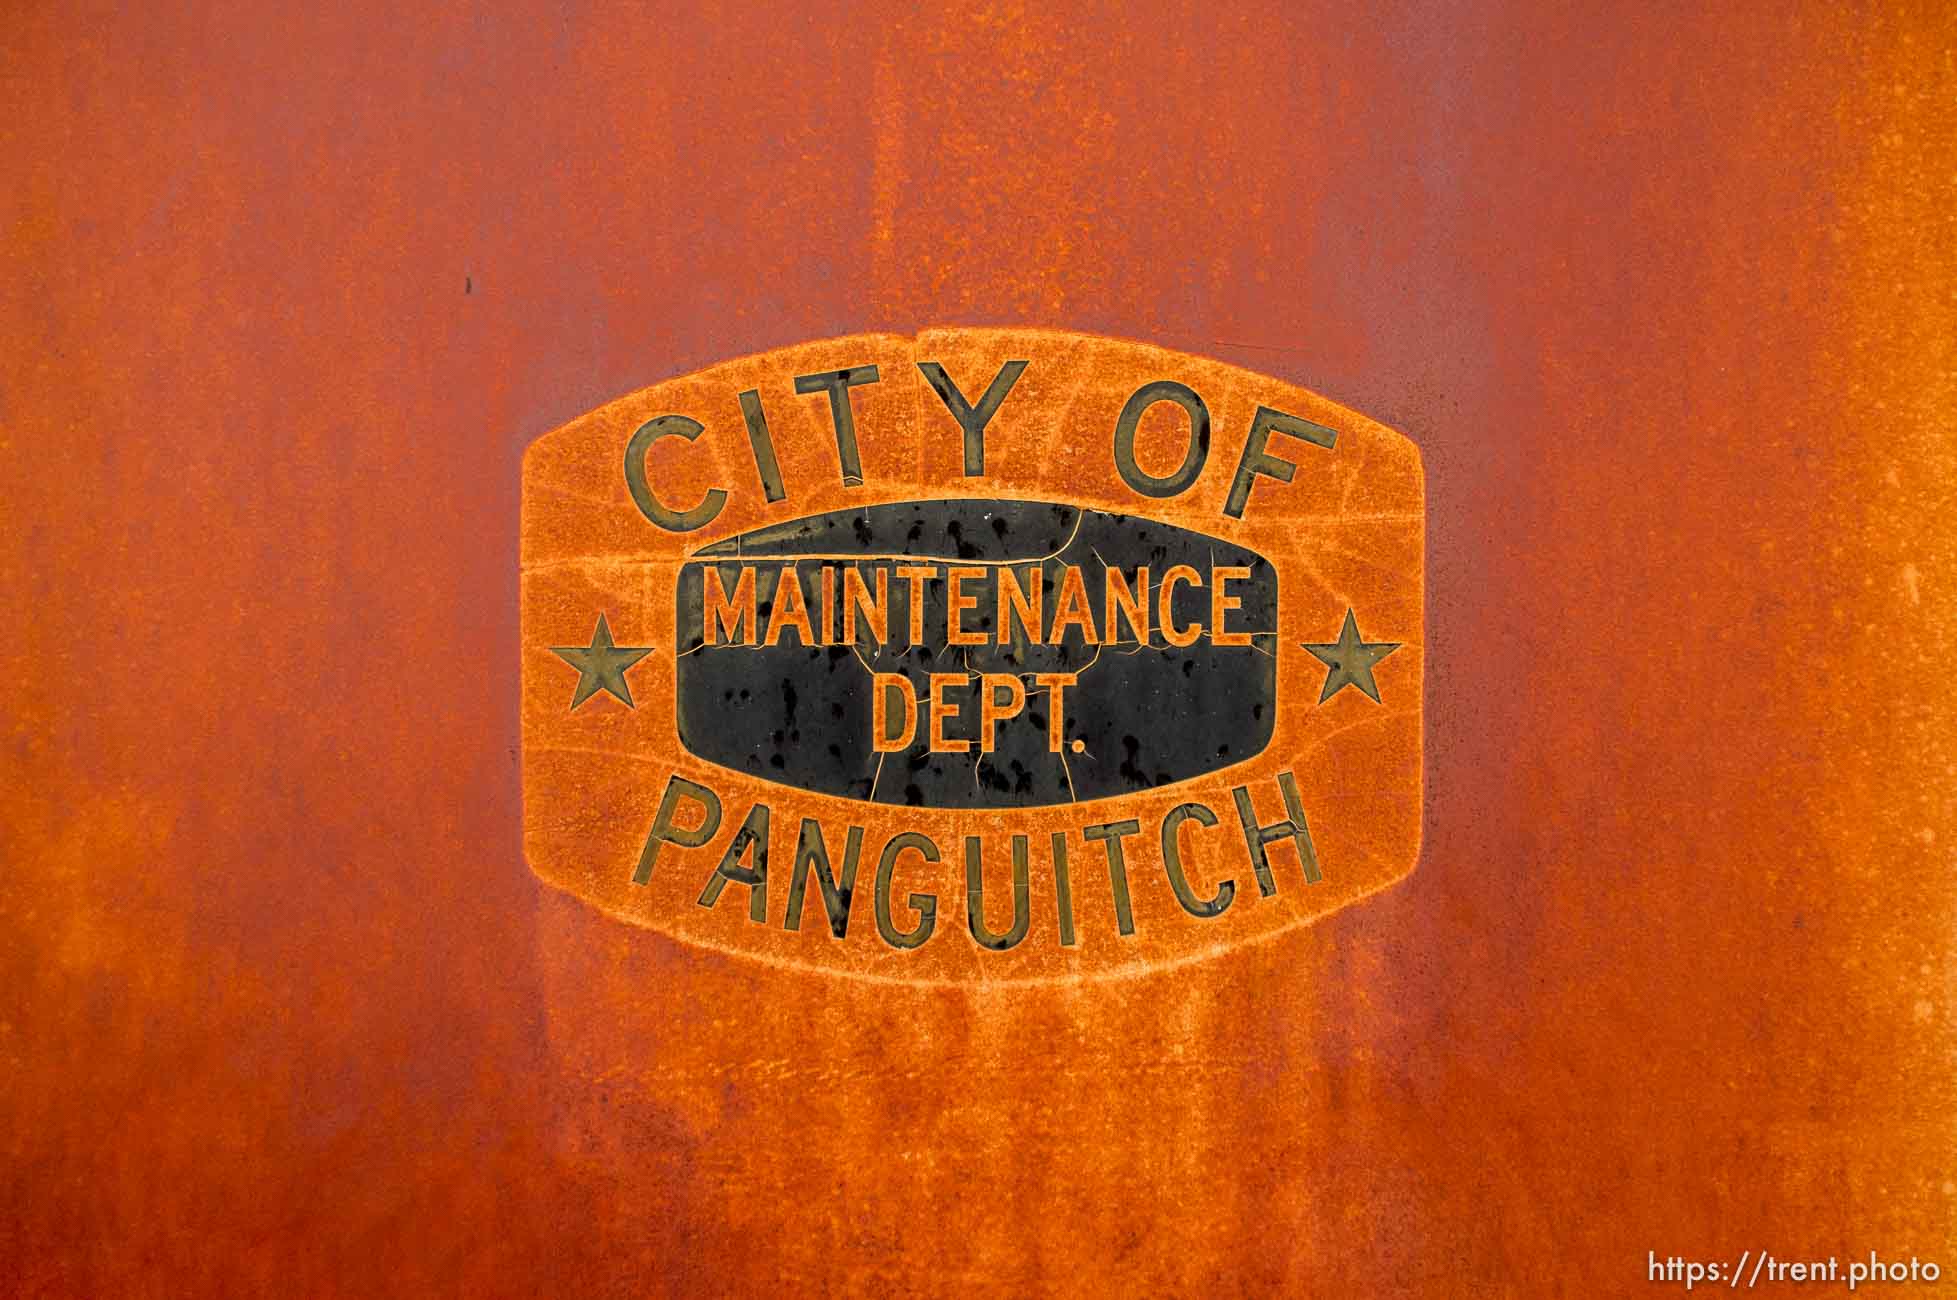 city of panguitch maintenance dept.